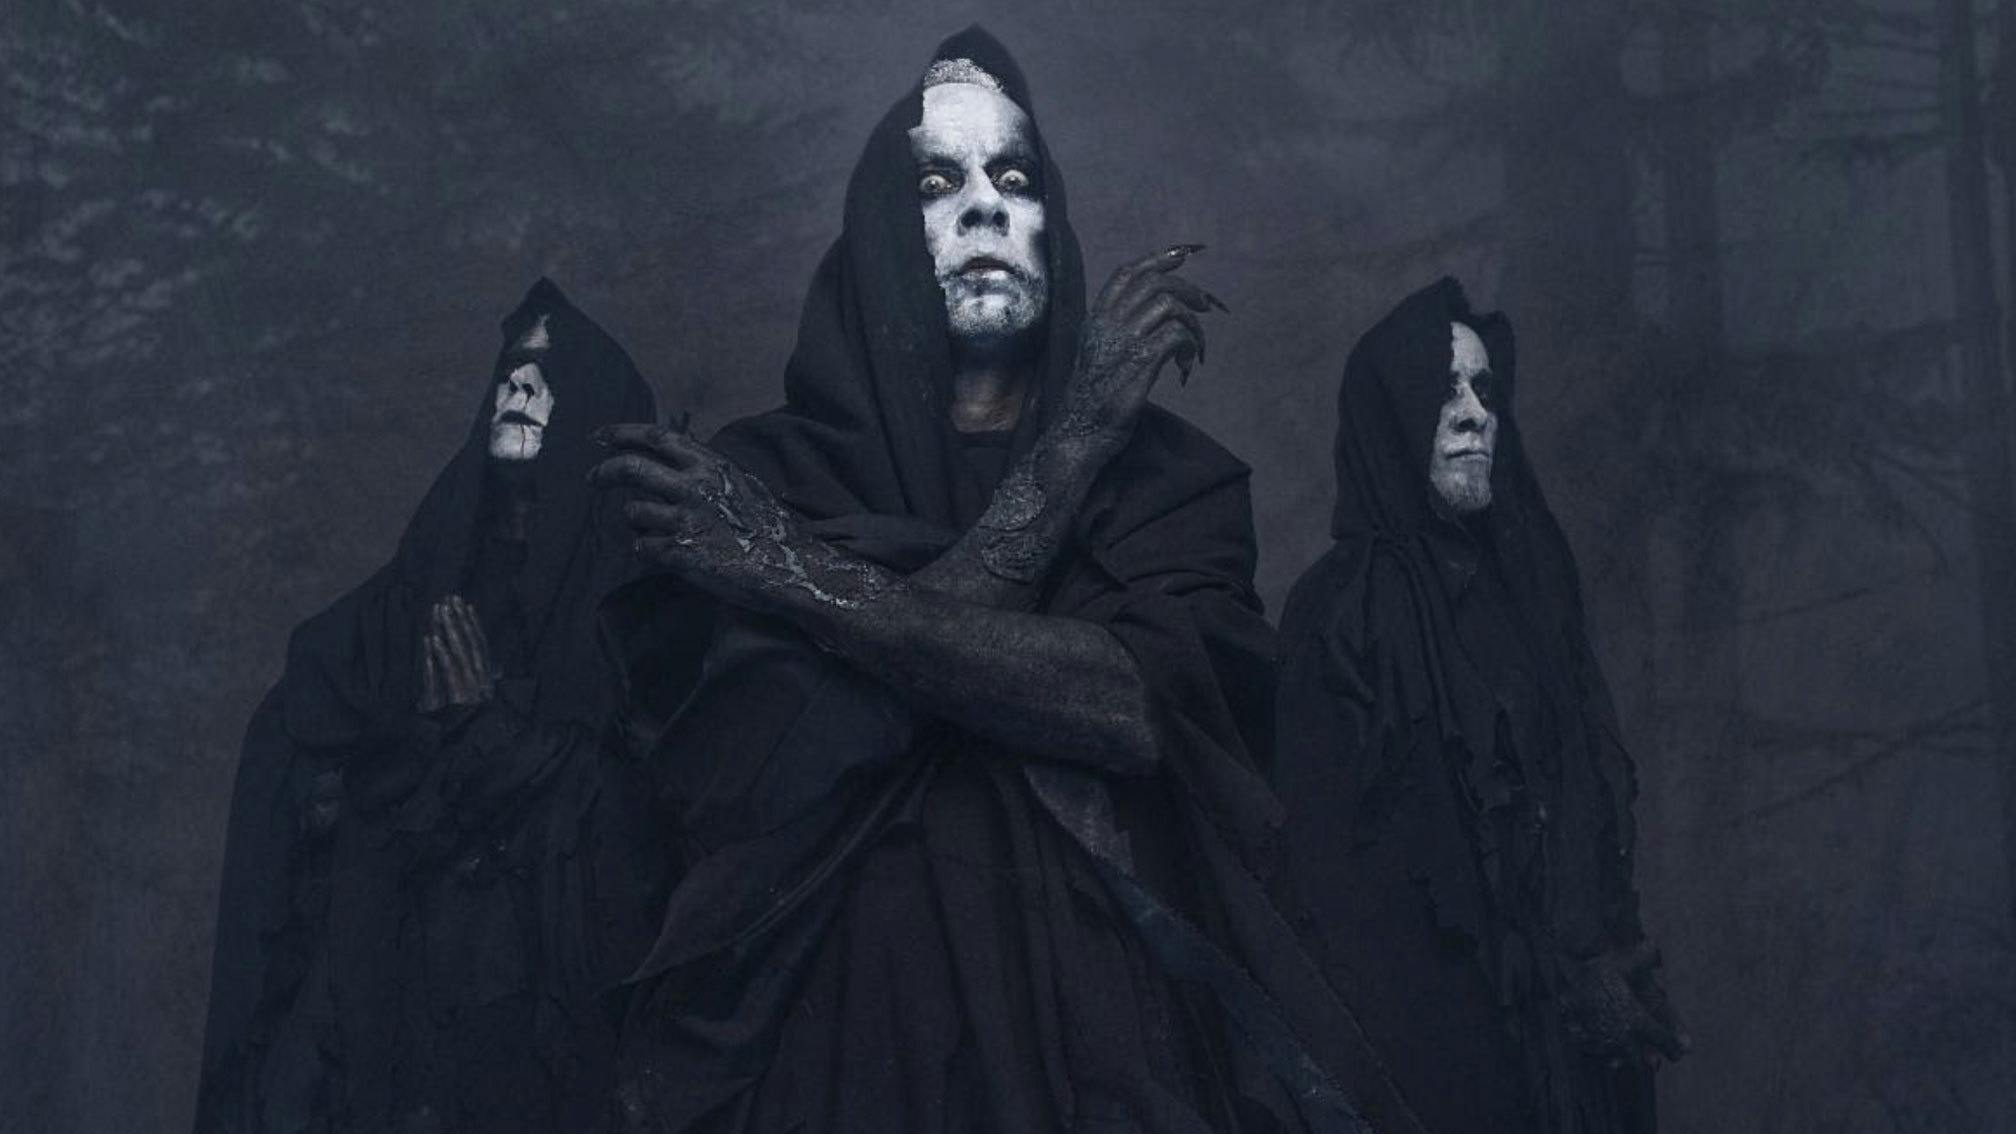 Behemoth drop new single Off To War!: “Militant times bring militant music”